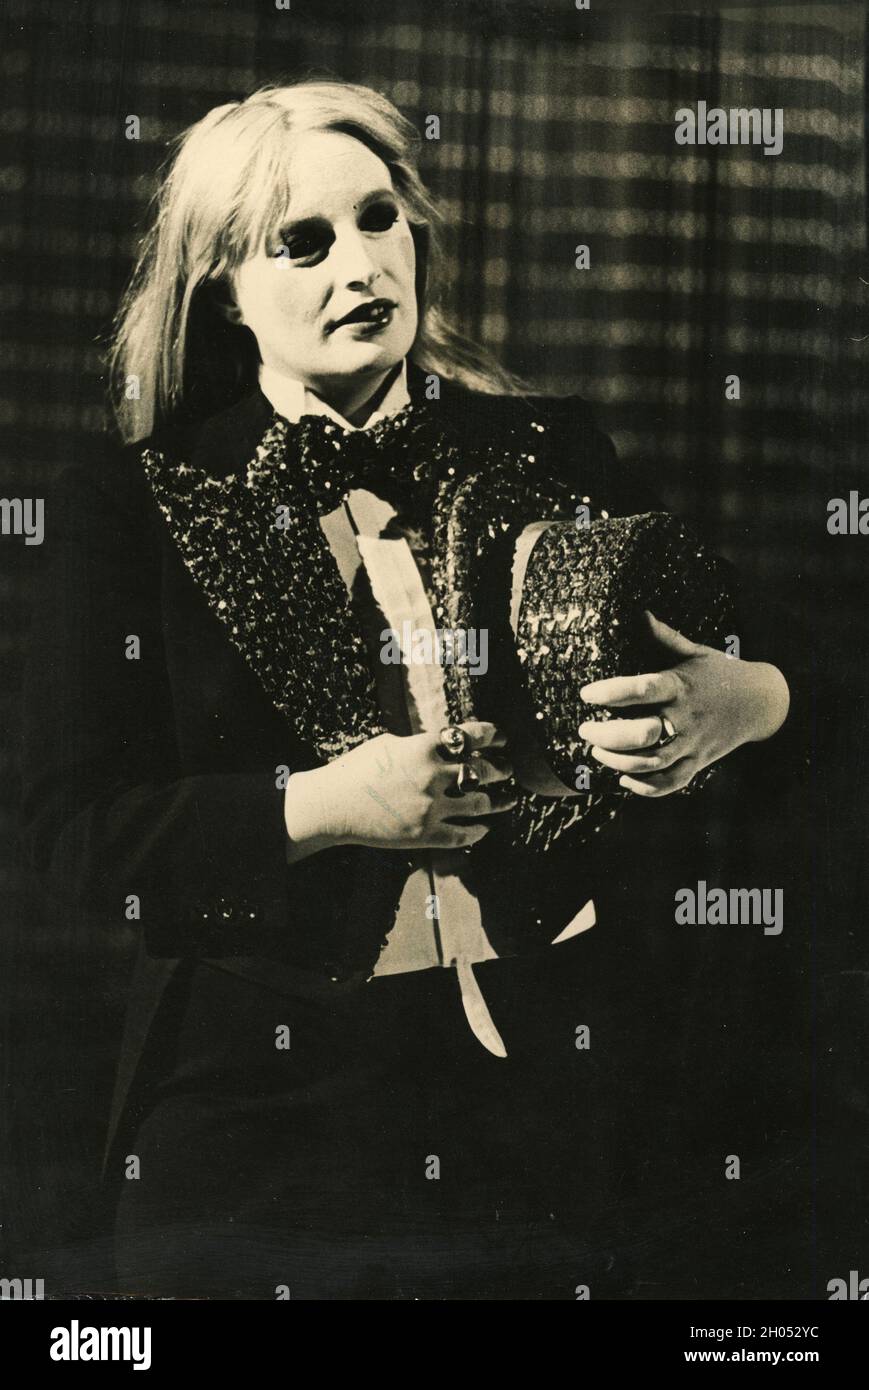 Italian singer and songwriter Gabriella Ferri, 1970s Stock Photo